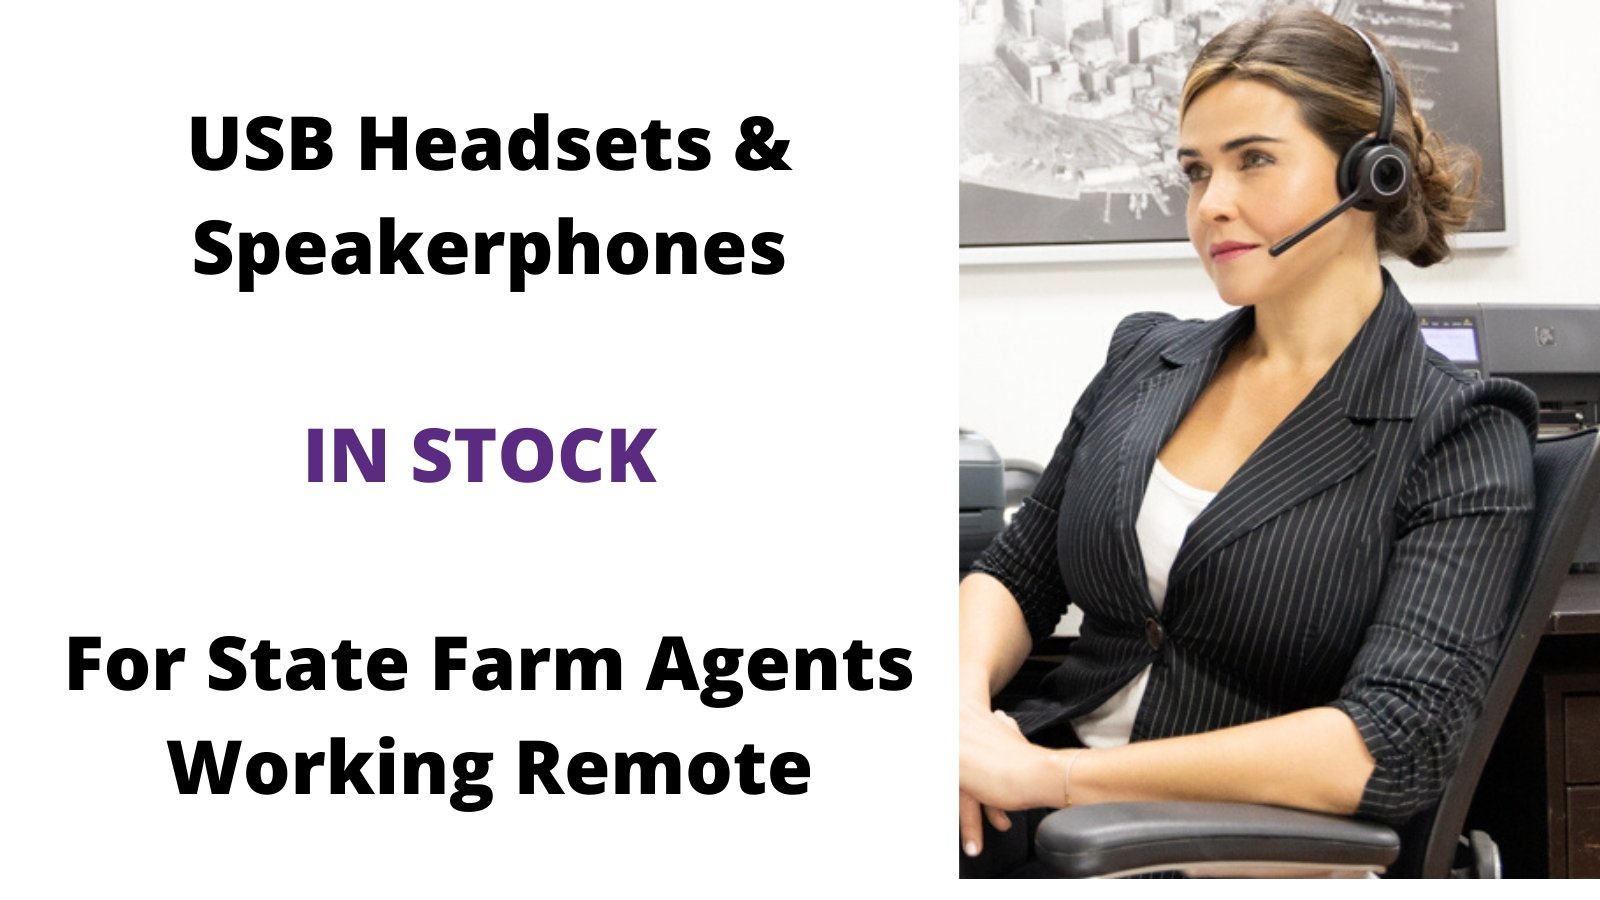 Headset & Speakerphones for Agency Network Agents for at Home Working - Headset Advisor